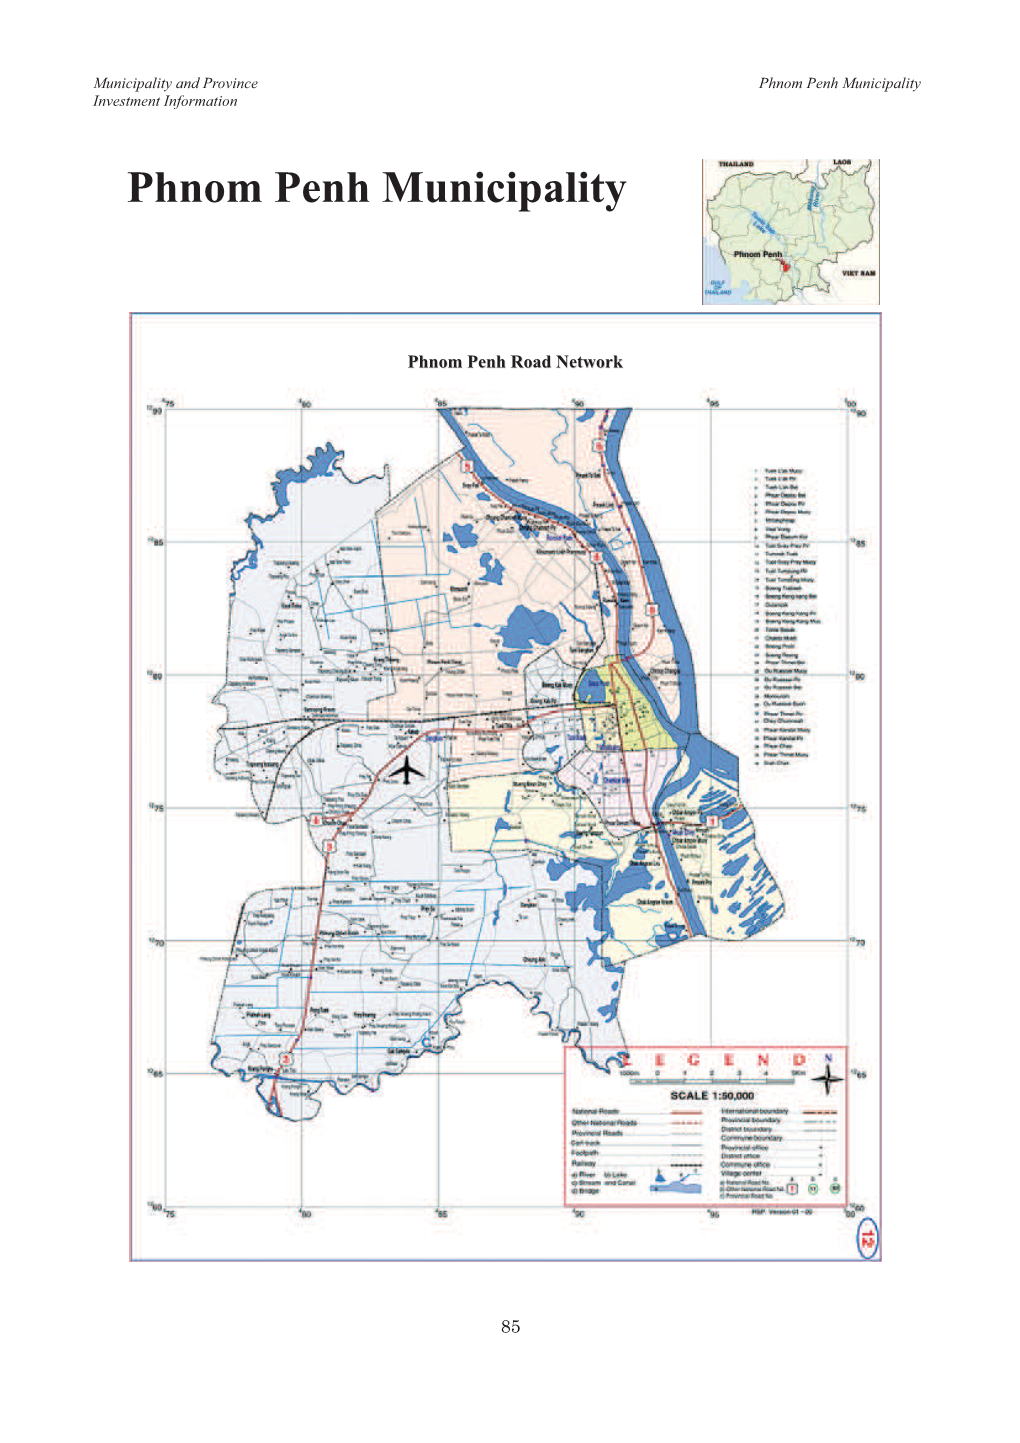 Phnom Penh Municipality Investment Information